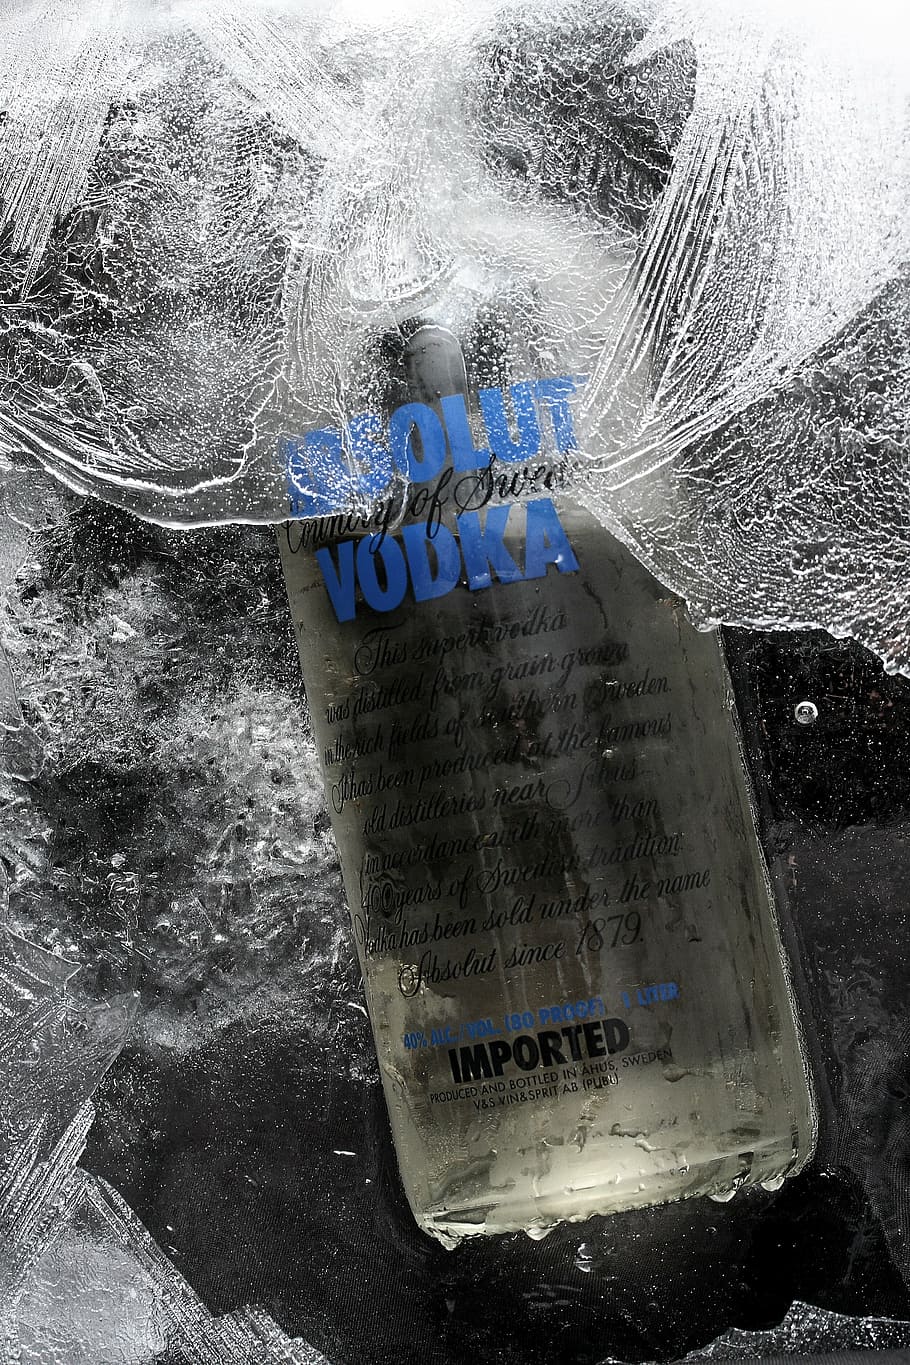 vodka bottle, product, ice, fiction, frozen, cold, wet, bottle, vodka, beverage